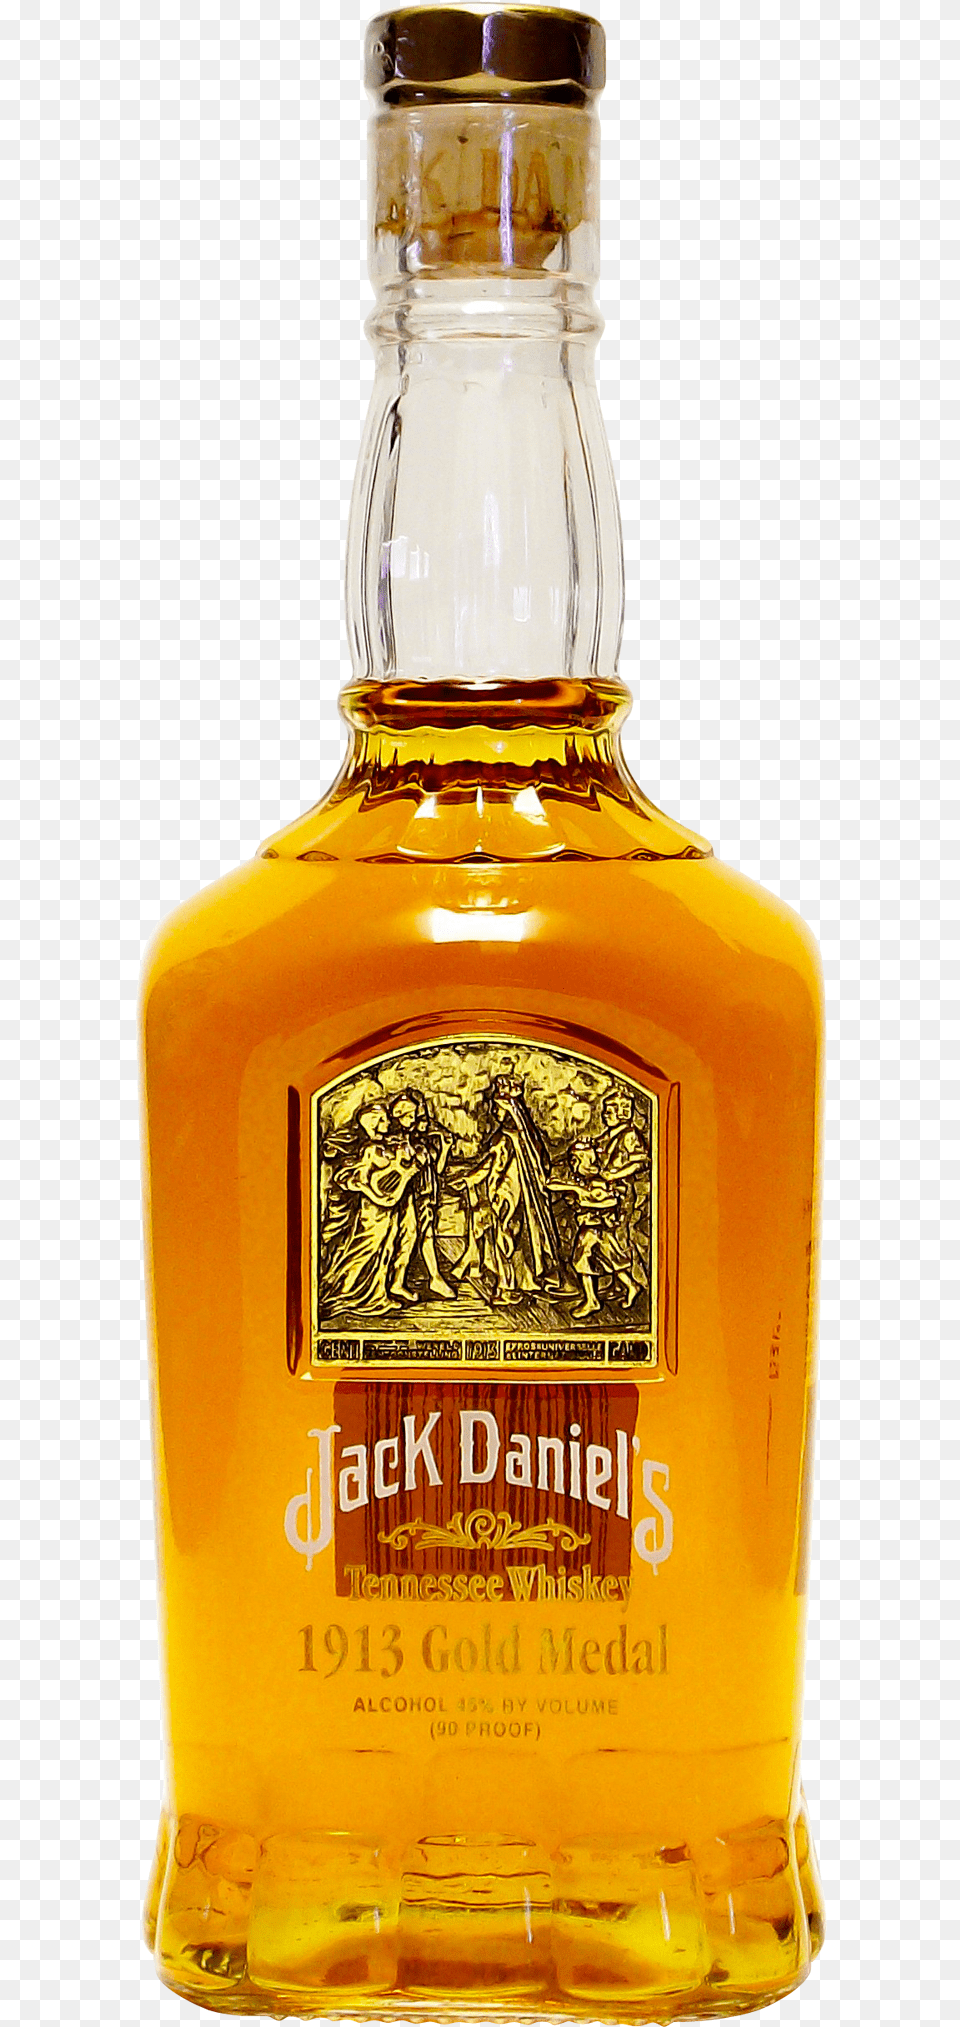 Butilki Na Dzhak Daniels Jack Daniels Bottle Alcoholic Jack Daniels Gold Medal 1913, Alcohol, Beverage, Liquor, Whisky Free Png Download